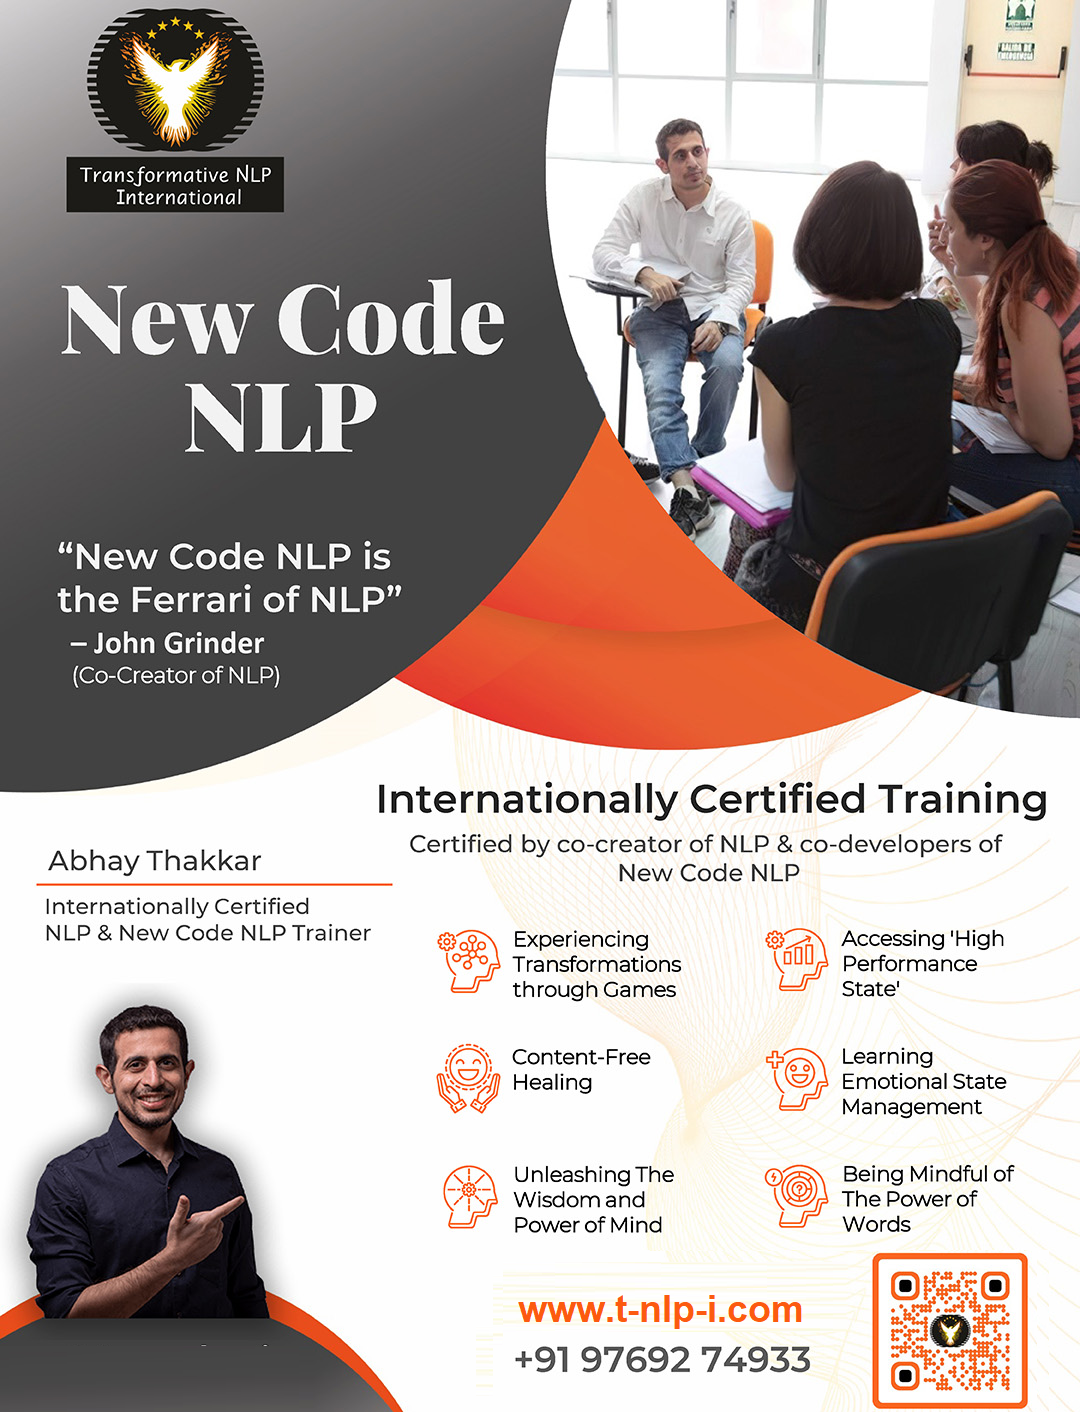 Internationally Certified New Code NLP Training by Abhay Thakkar - Indore